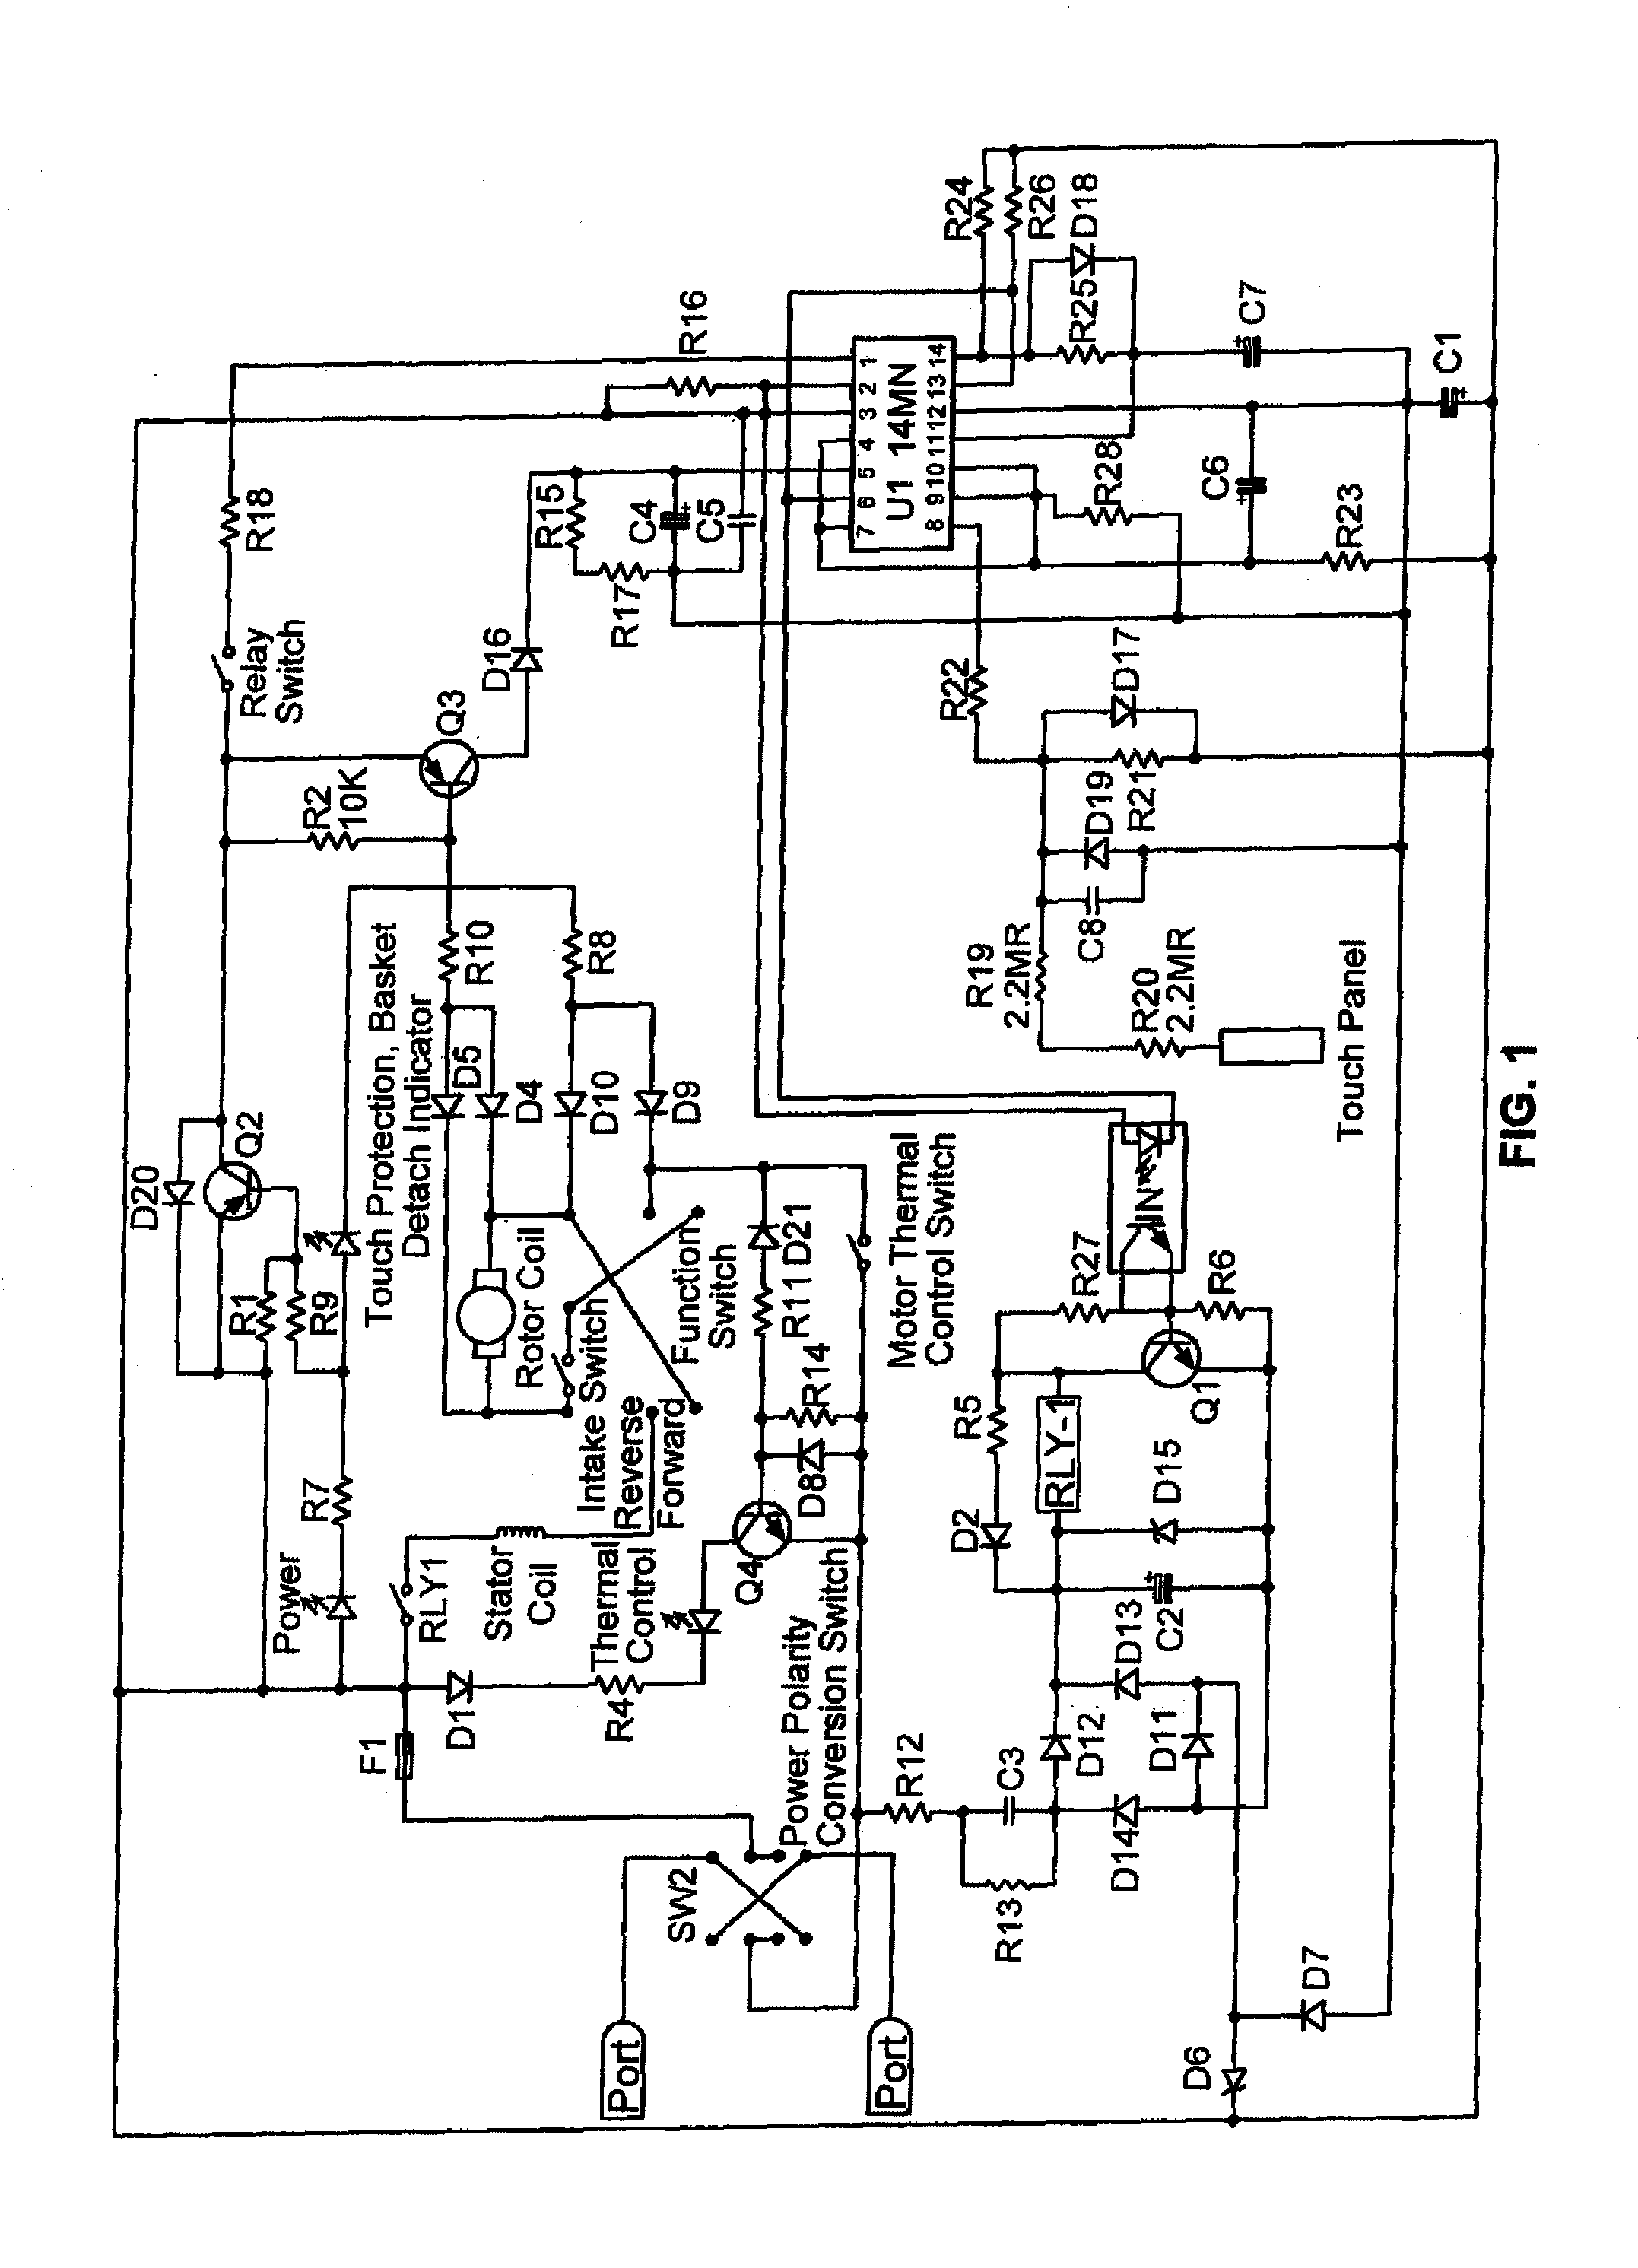 paper shredder wiring diagram